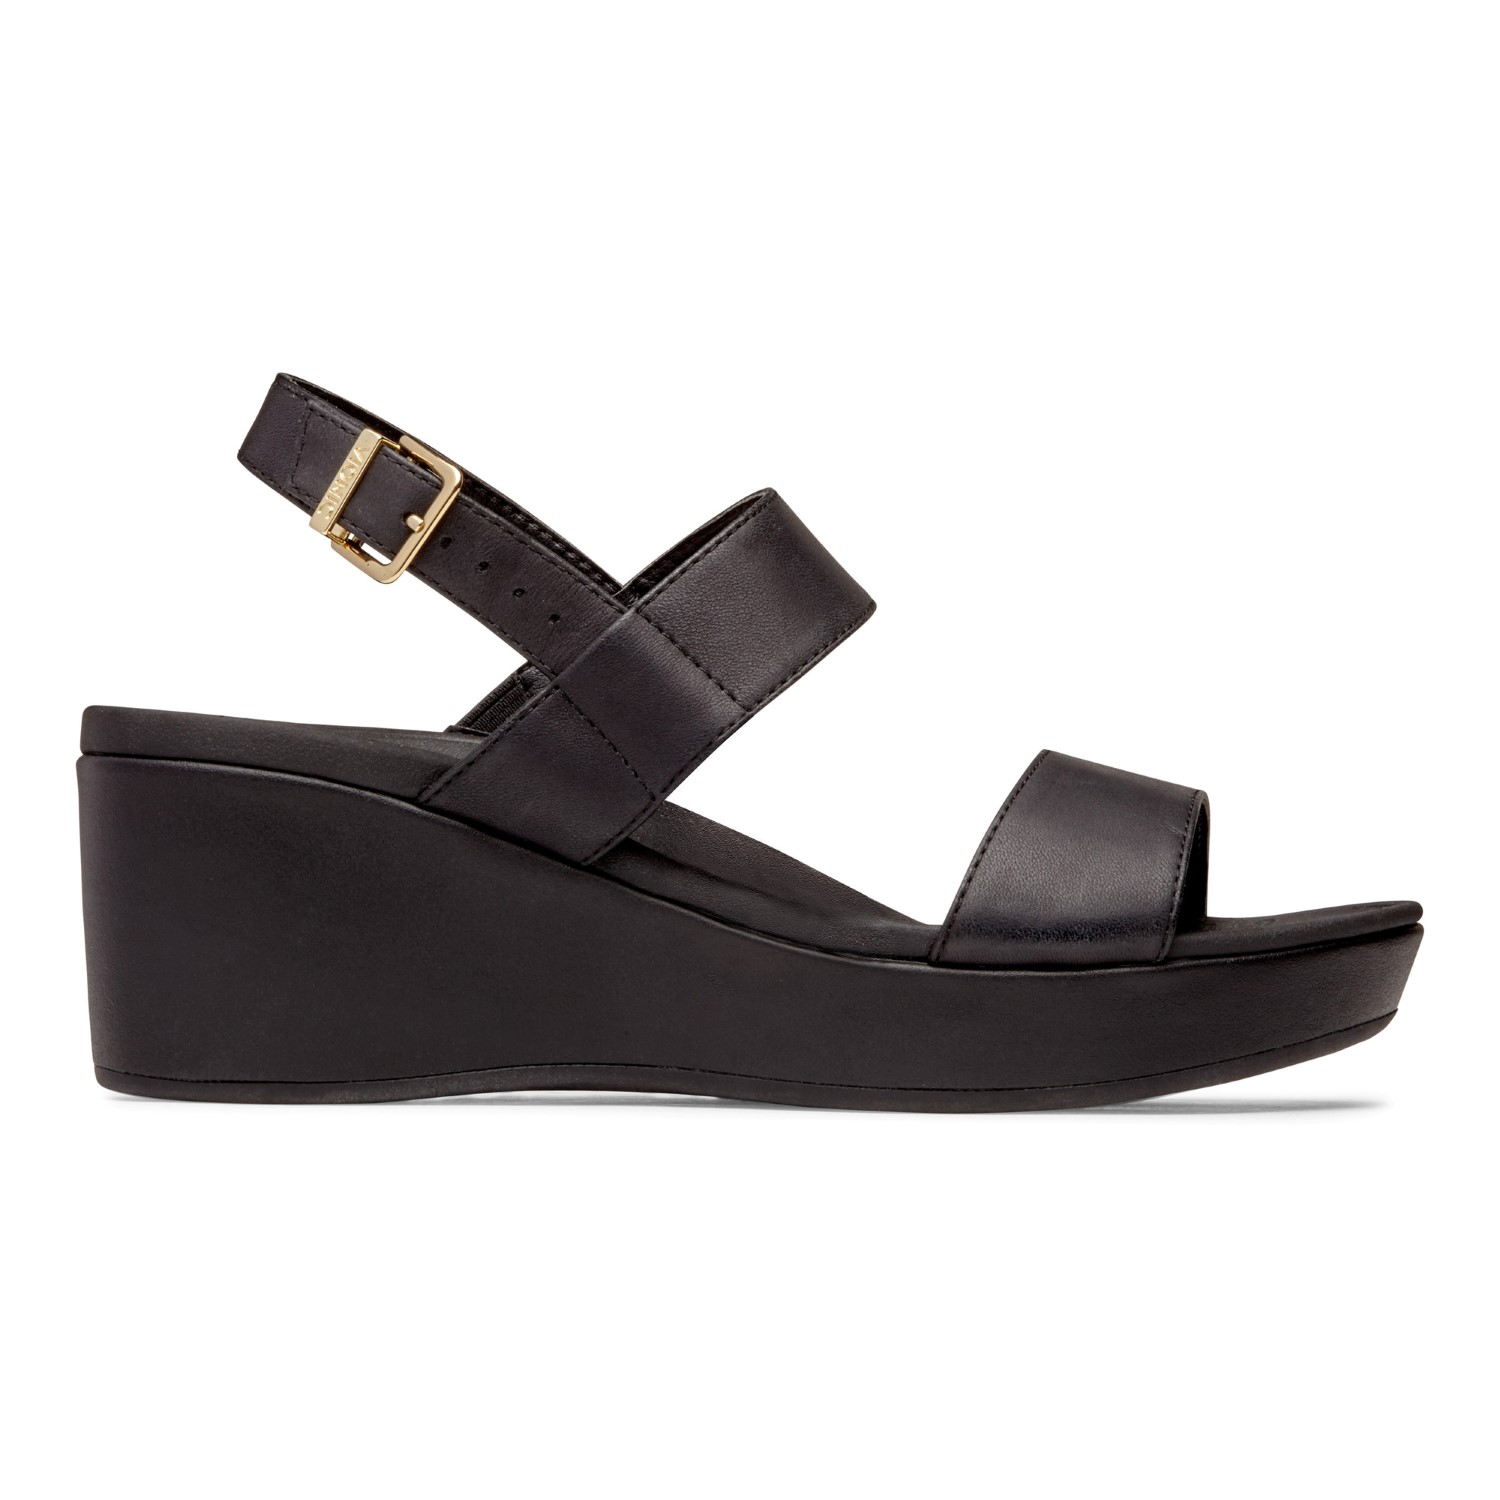 New Vionic Women Atlantic Lovell Banded Black Leather Sandals Wedge Shoe Sz 8 M